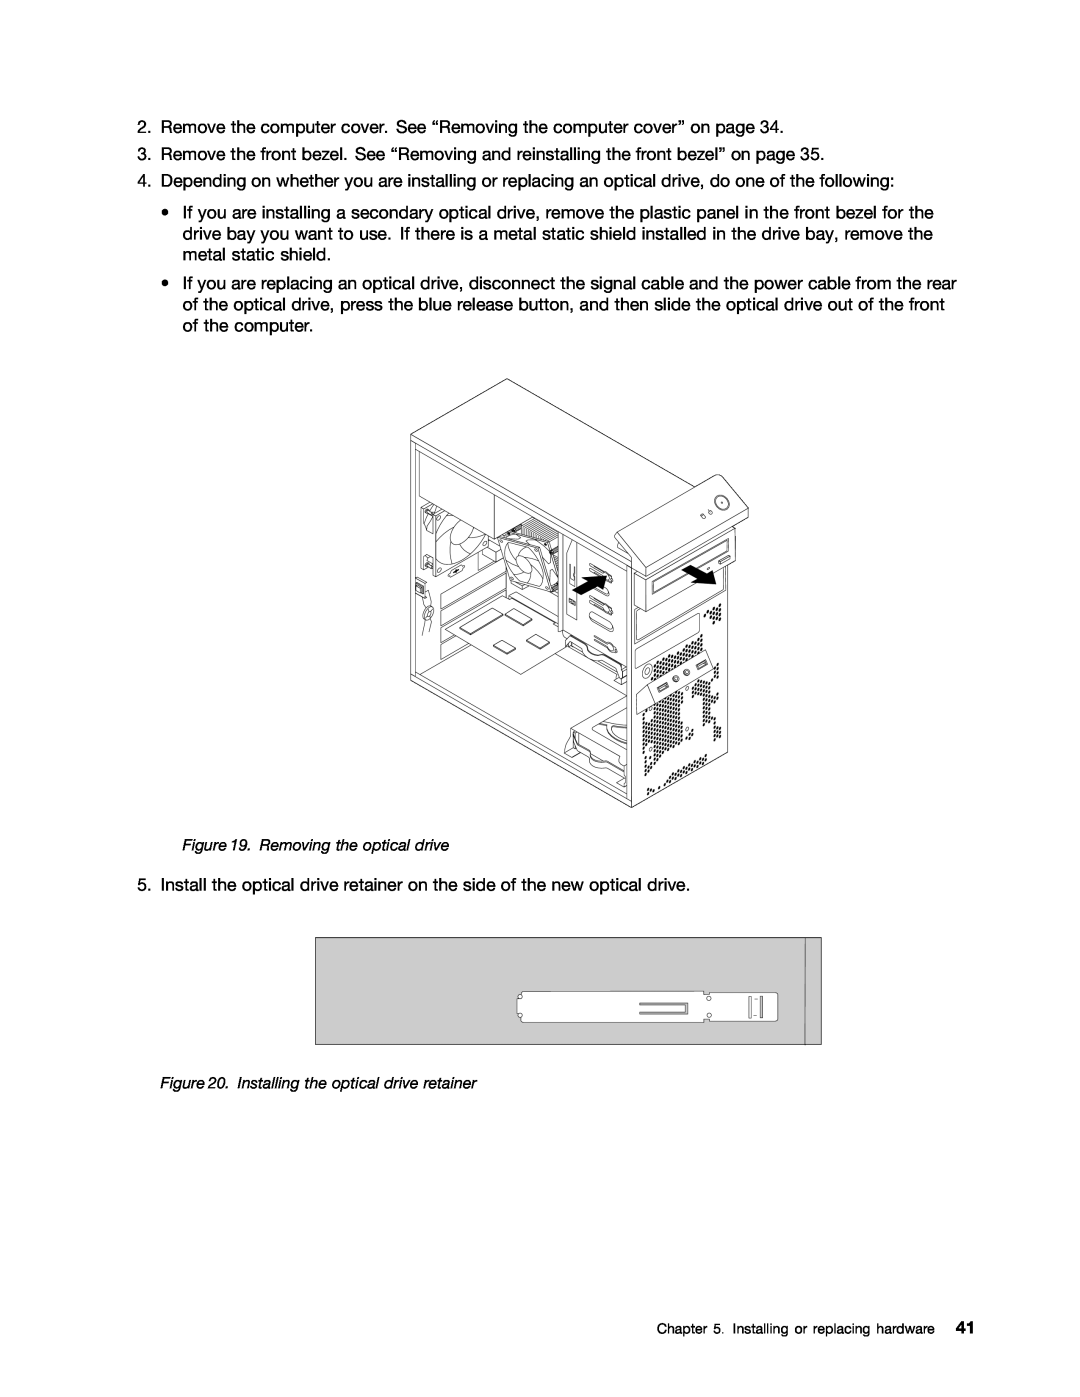 Lenovo 2697, 2756D7U Removing the optical drive, Installing the optical drive retainer, Installing or replacing hardware 